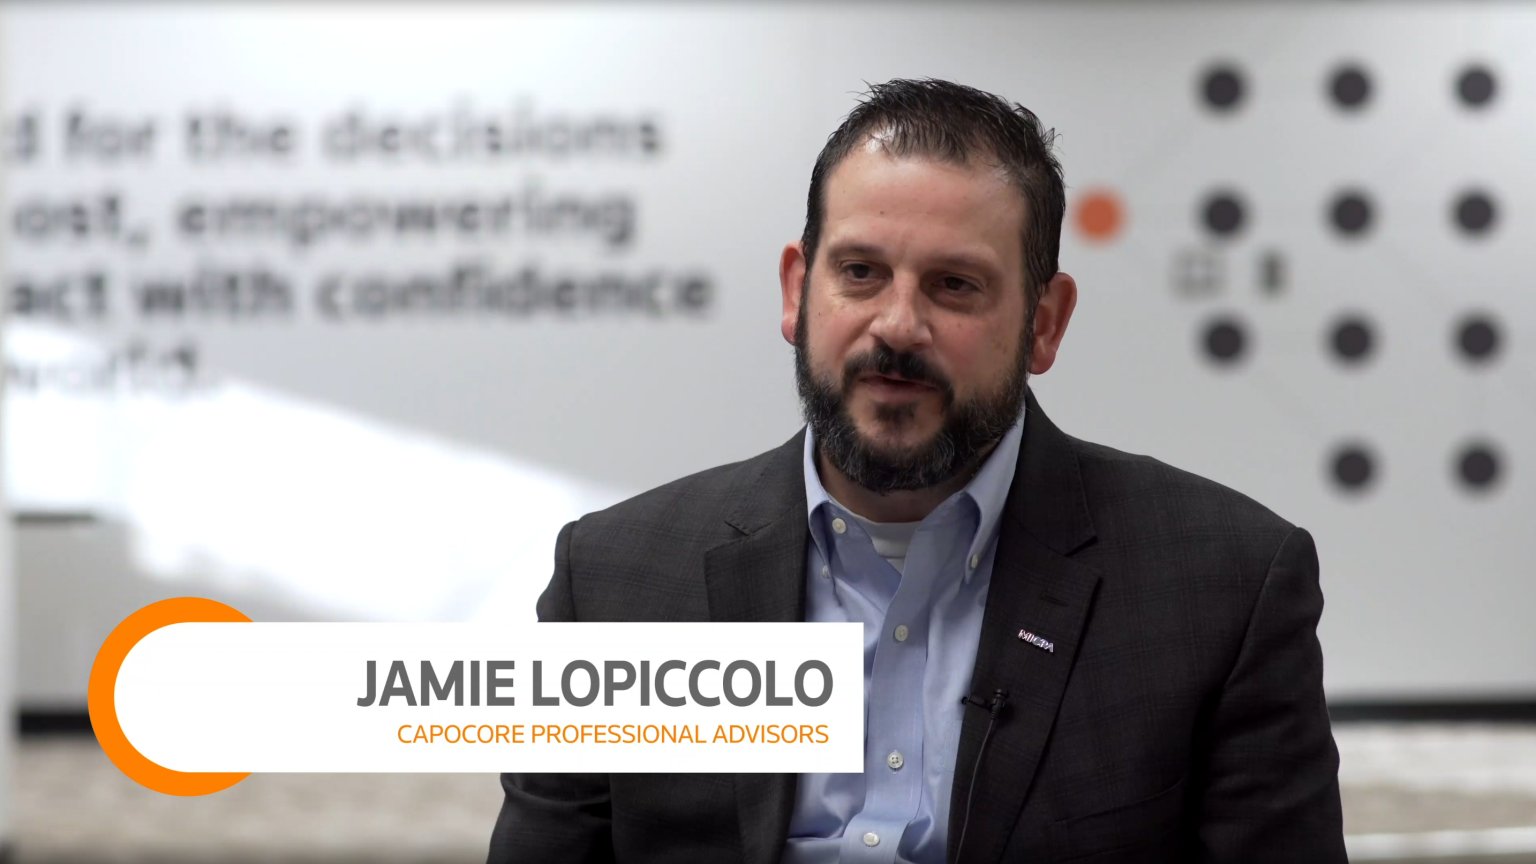 Jamie Lopiccolo (Capocore Professional Advisors) Onvio Firm Management review